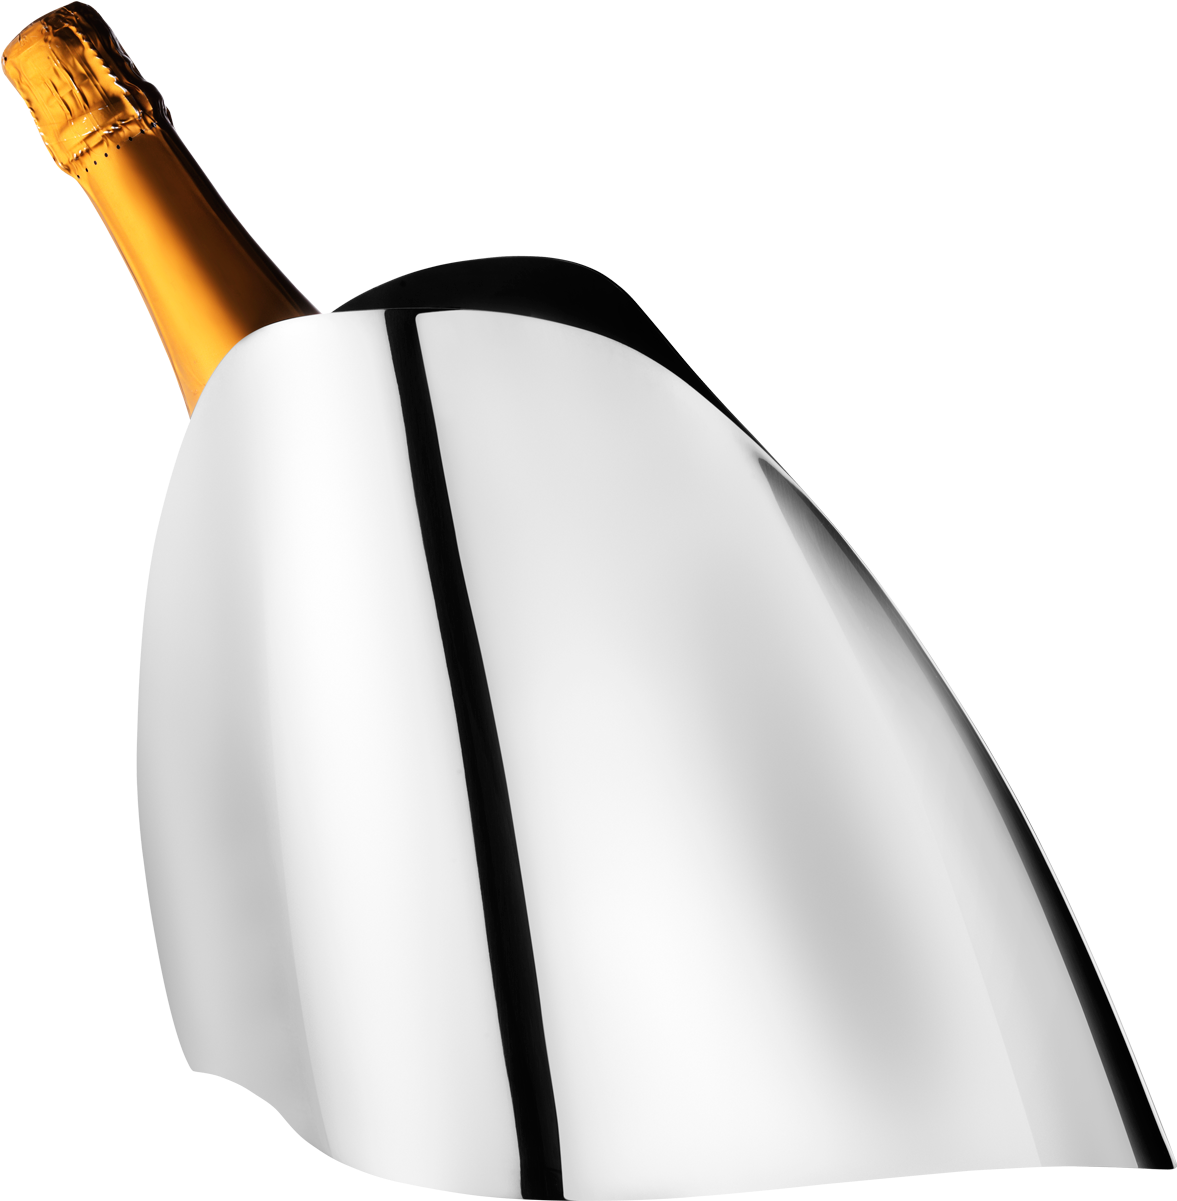 Georg Jensen - Indulgence Champagne Cooler (1200x1200)